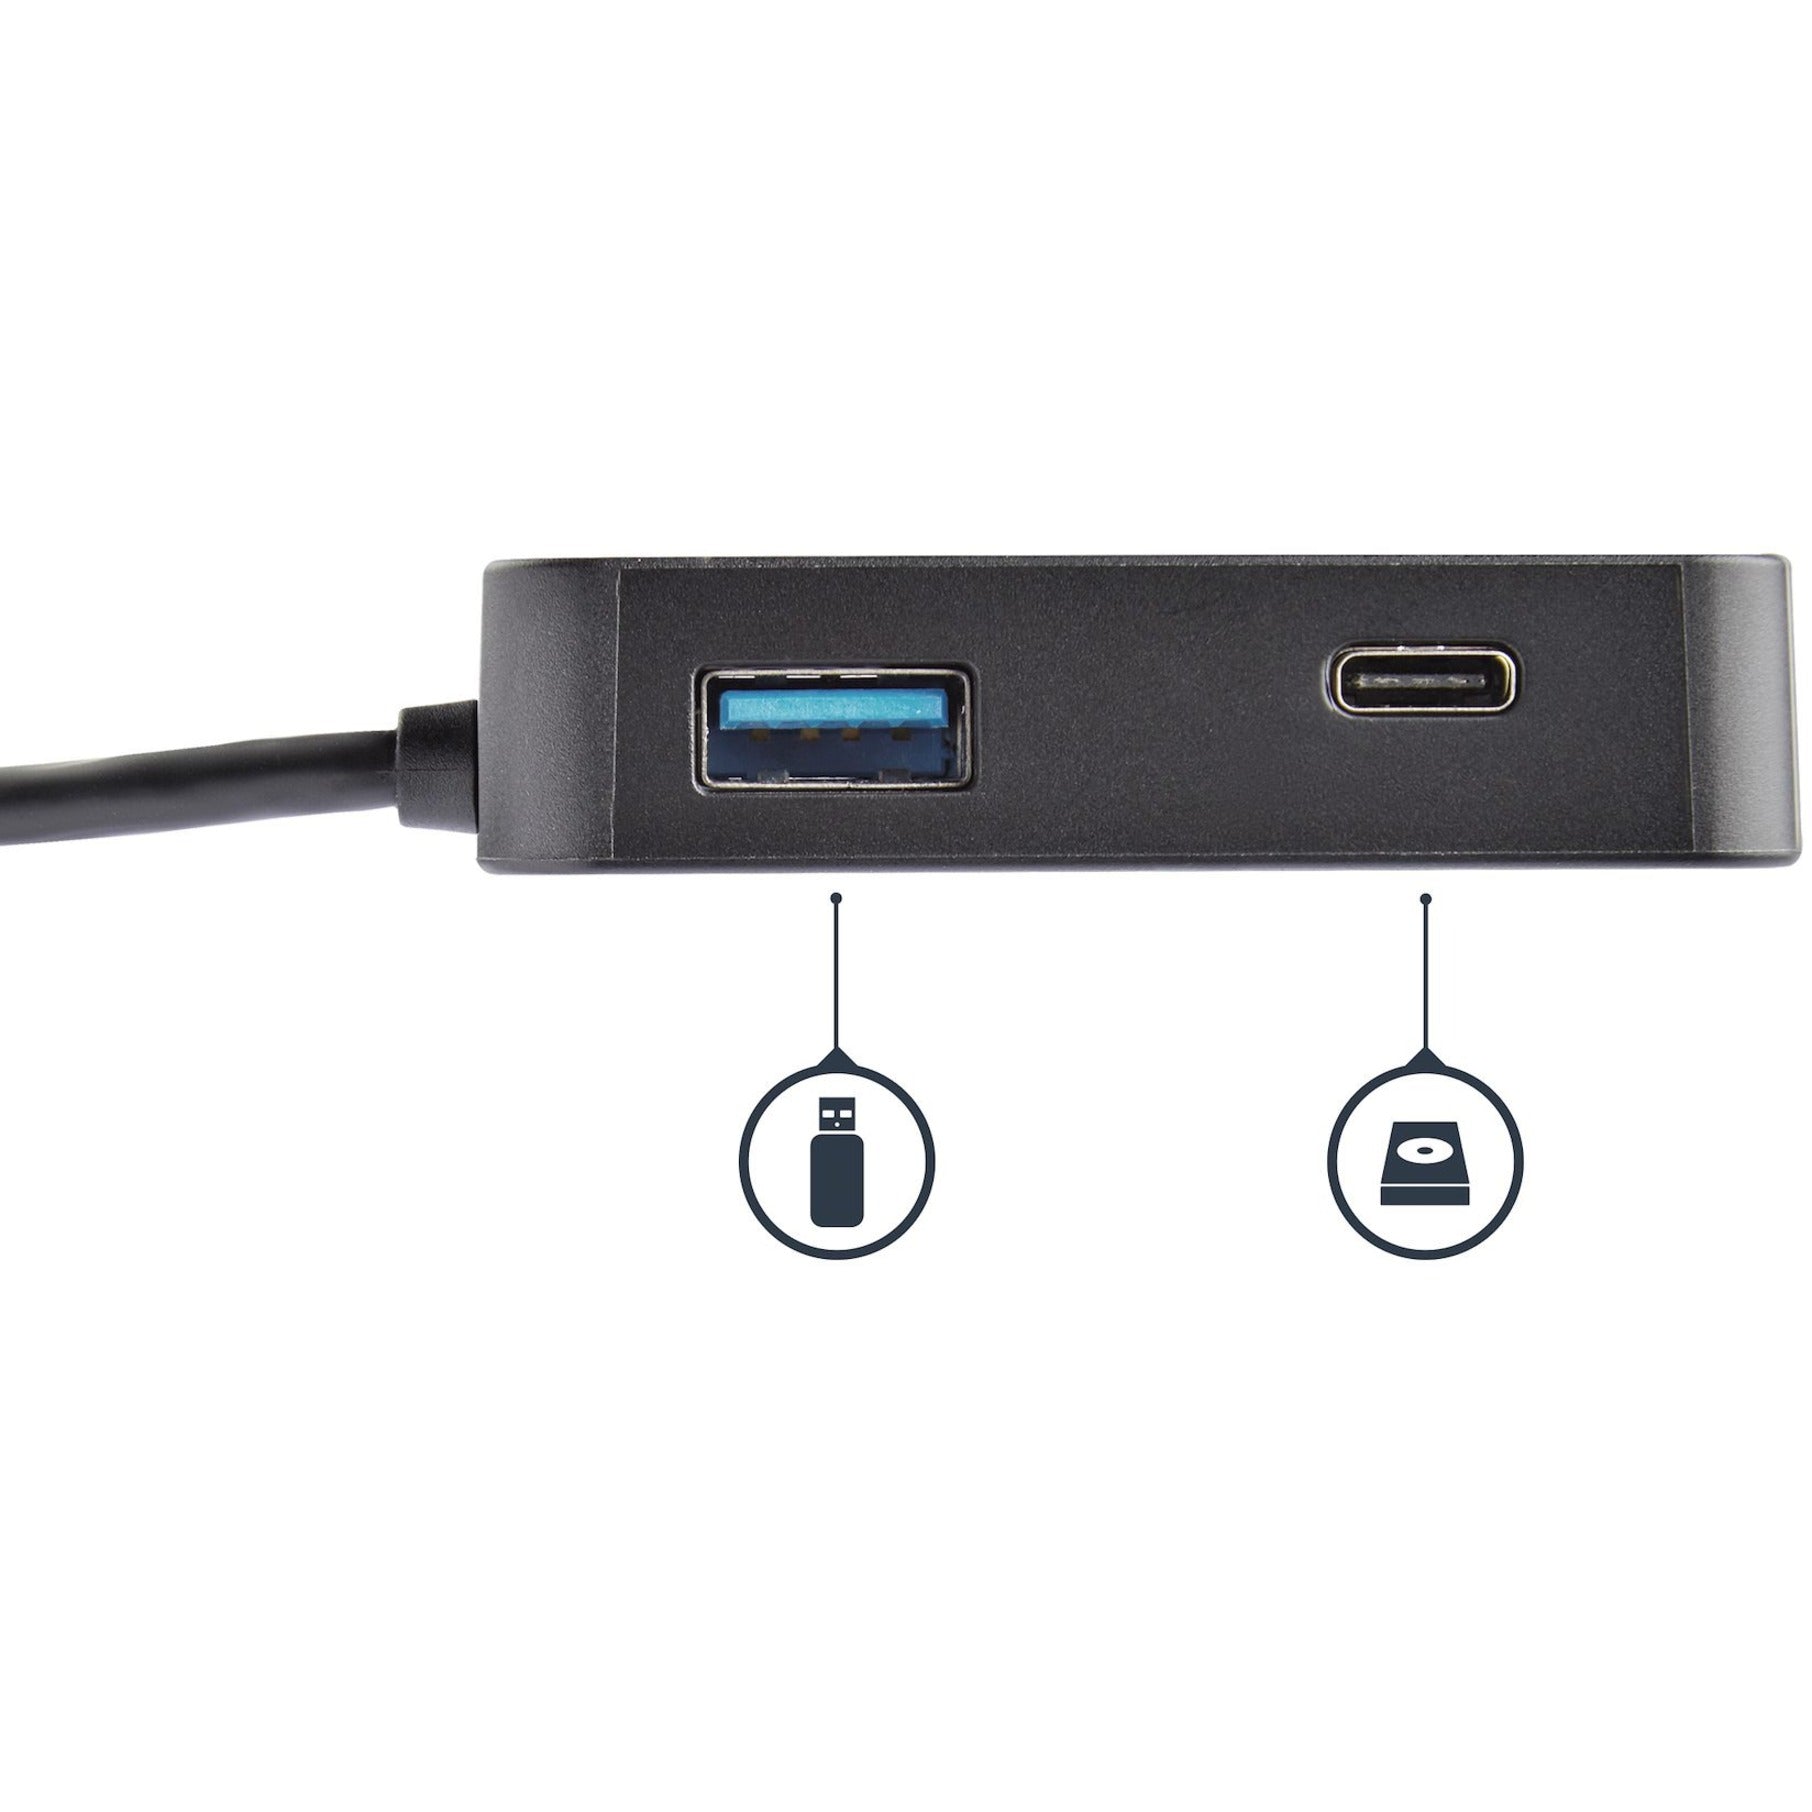 StarTech.com DKT30CHD USB-C Multiport Adapter for Laptops - 4K HDMI, GbE, USB-C, USB-A, USB 3.0, Mobile Laptop Docking Station